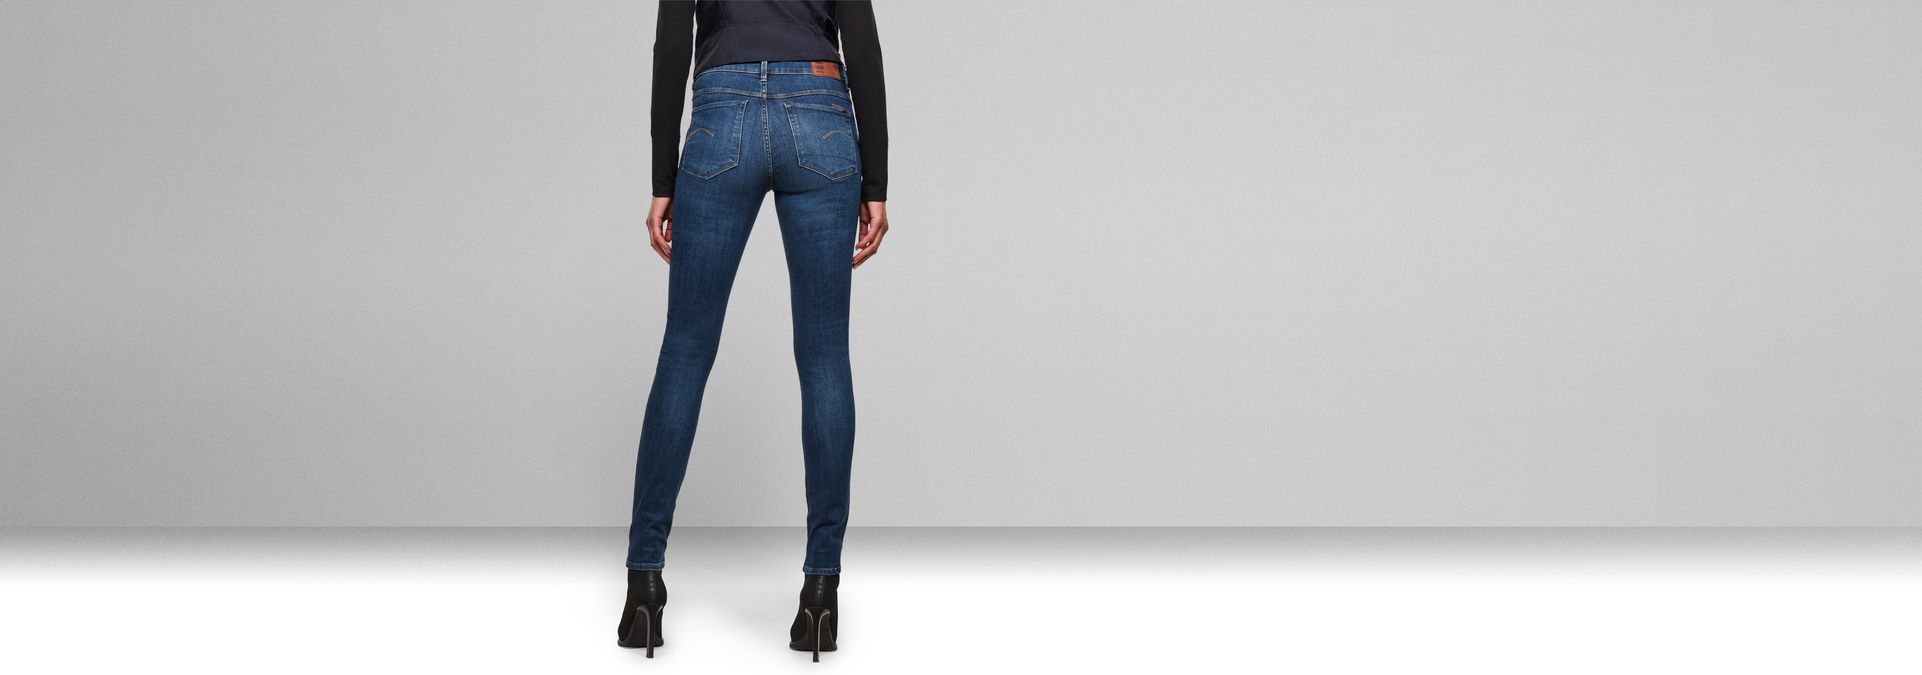 Jeans Skynny 3301 High Skinny WmnG-Star RAW in Denim di colore Blu Donna Abbigliamento da Jeans da Jeans skinny 